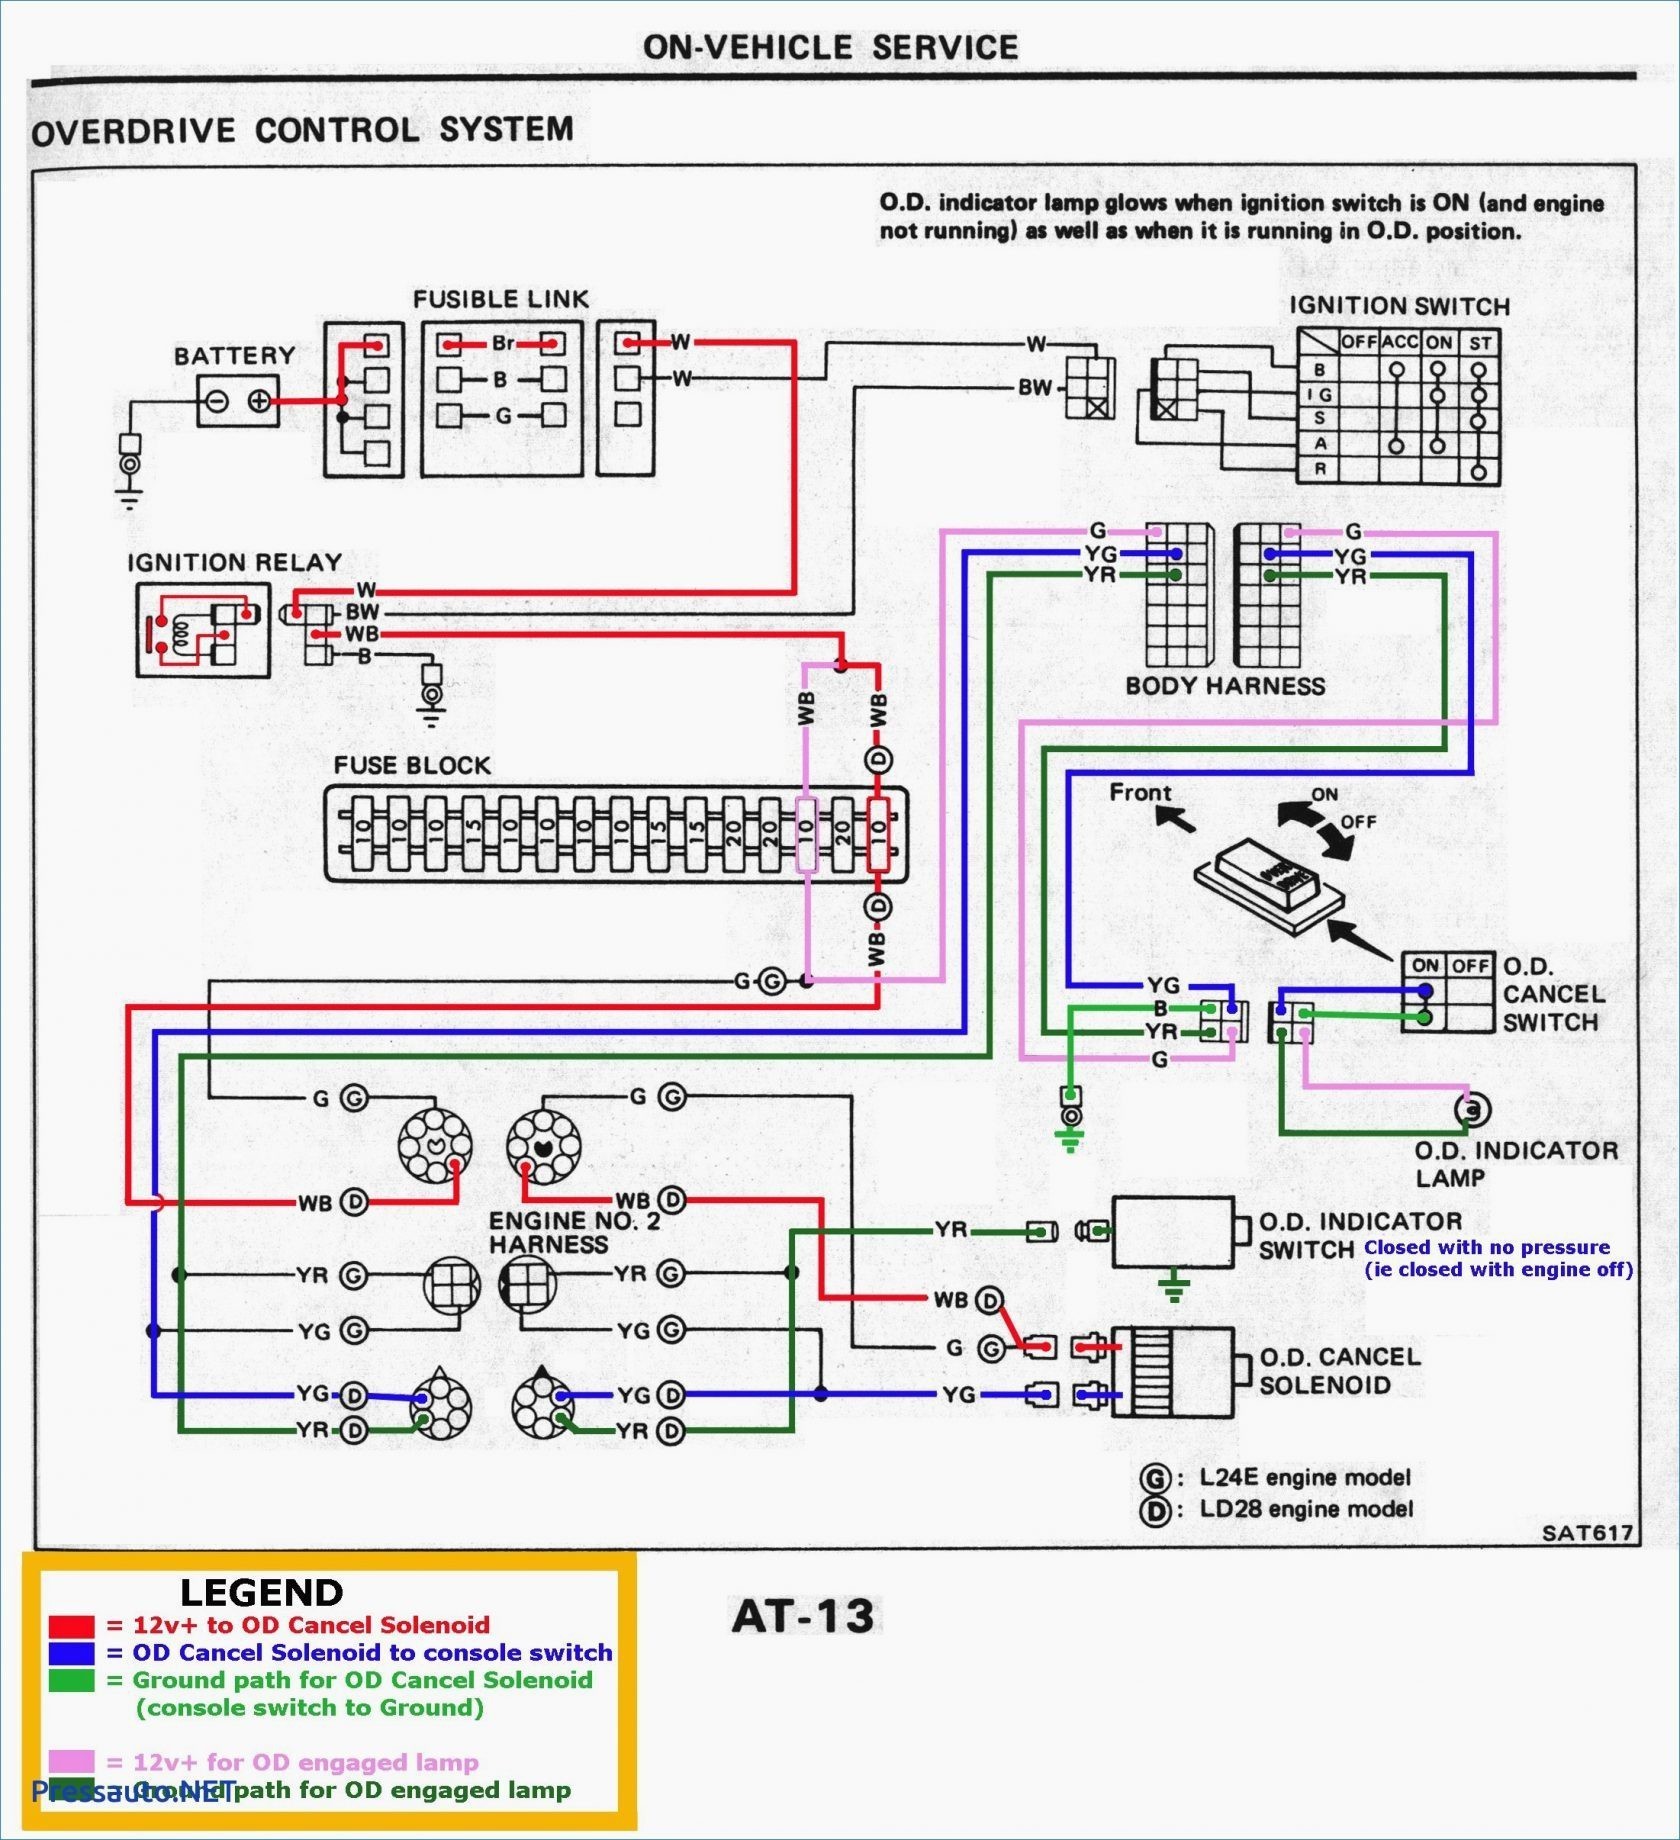 2000 Honda Accord V6 Engine Diagram 2012 Honda Accord Engine Diagram Of 2000 Honda Accord V6 Engine Diagram